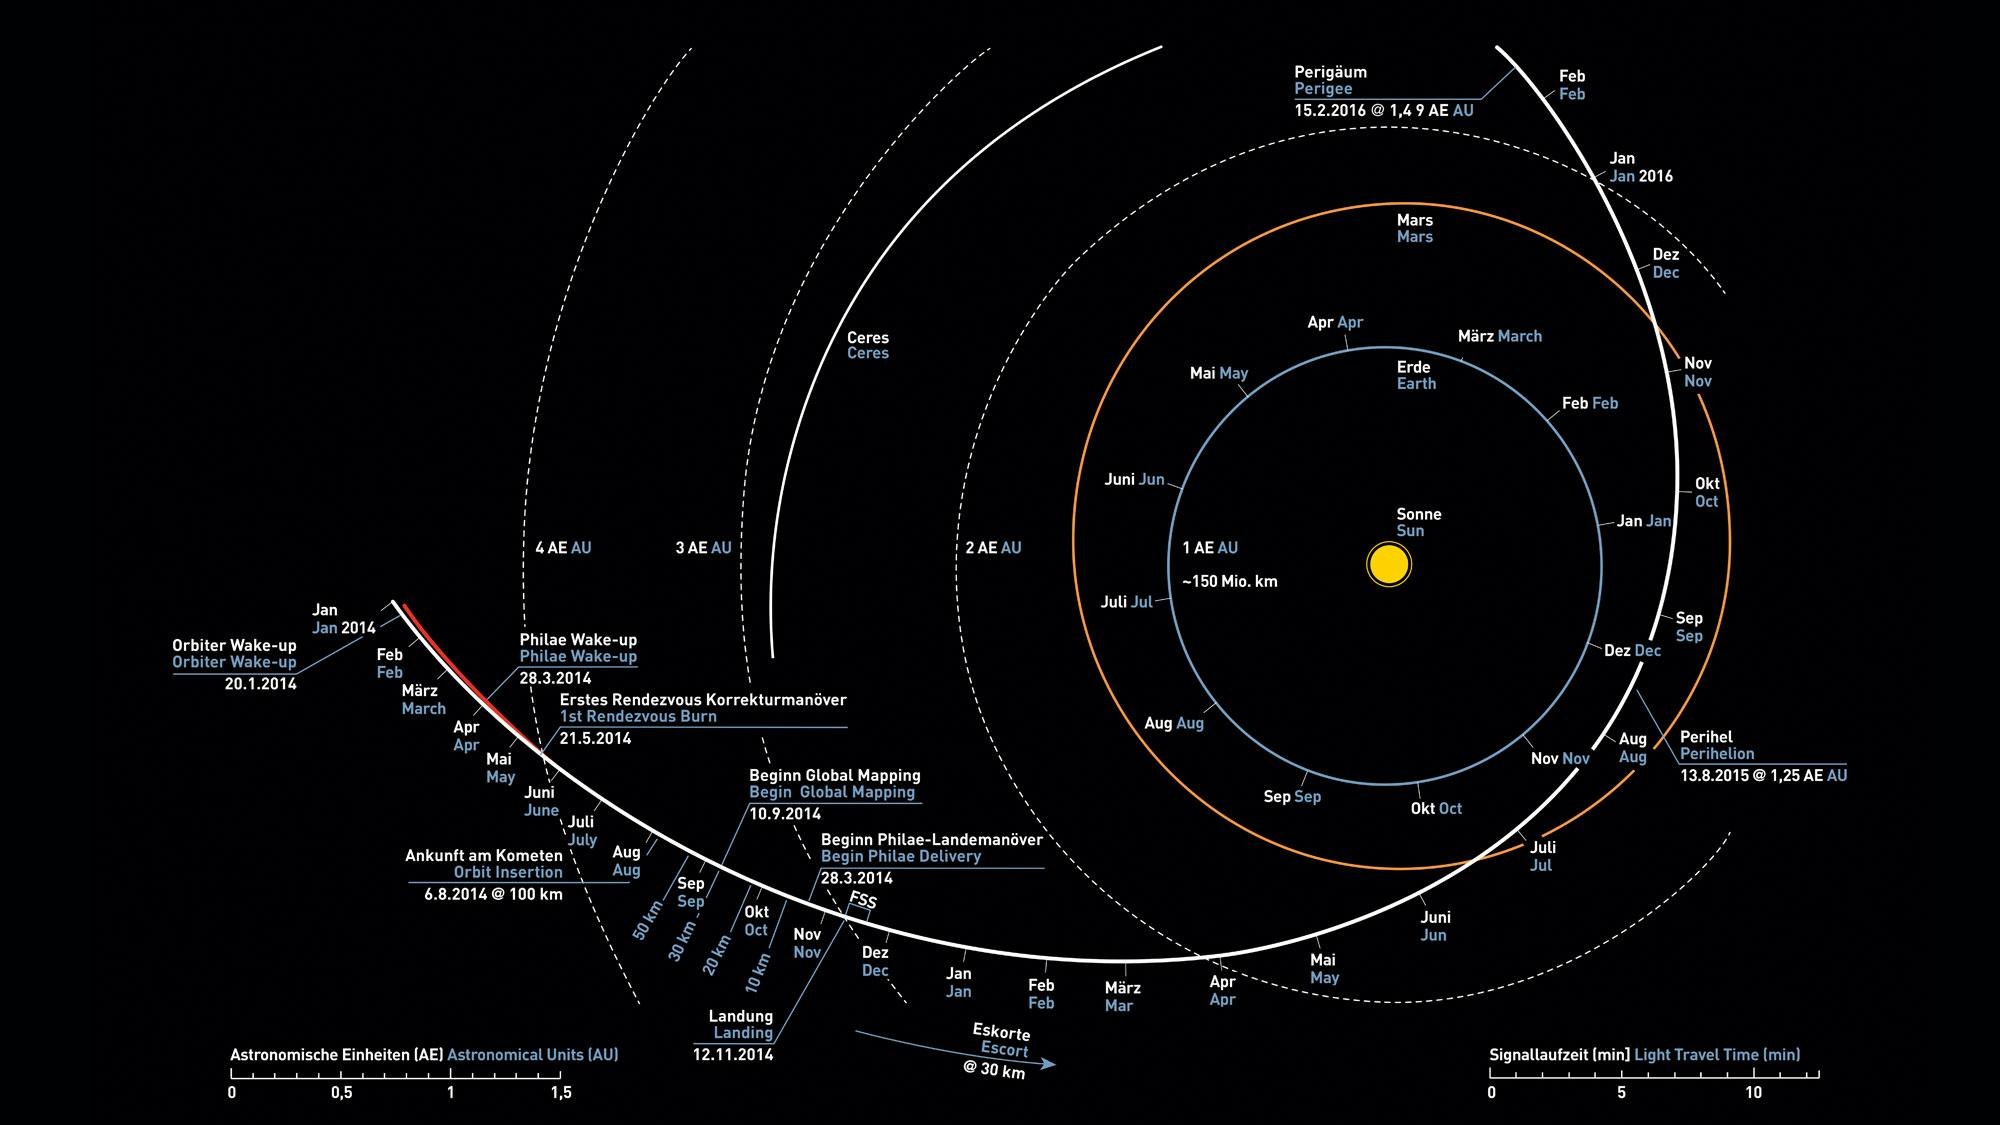 Rosetta's journey through the Solar System